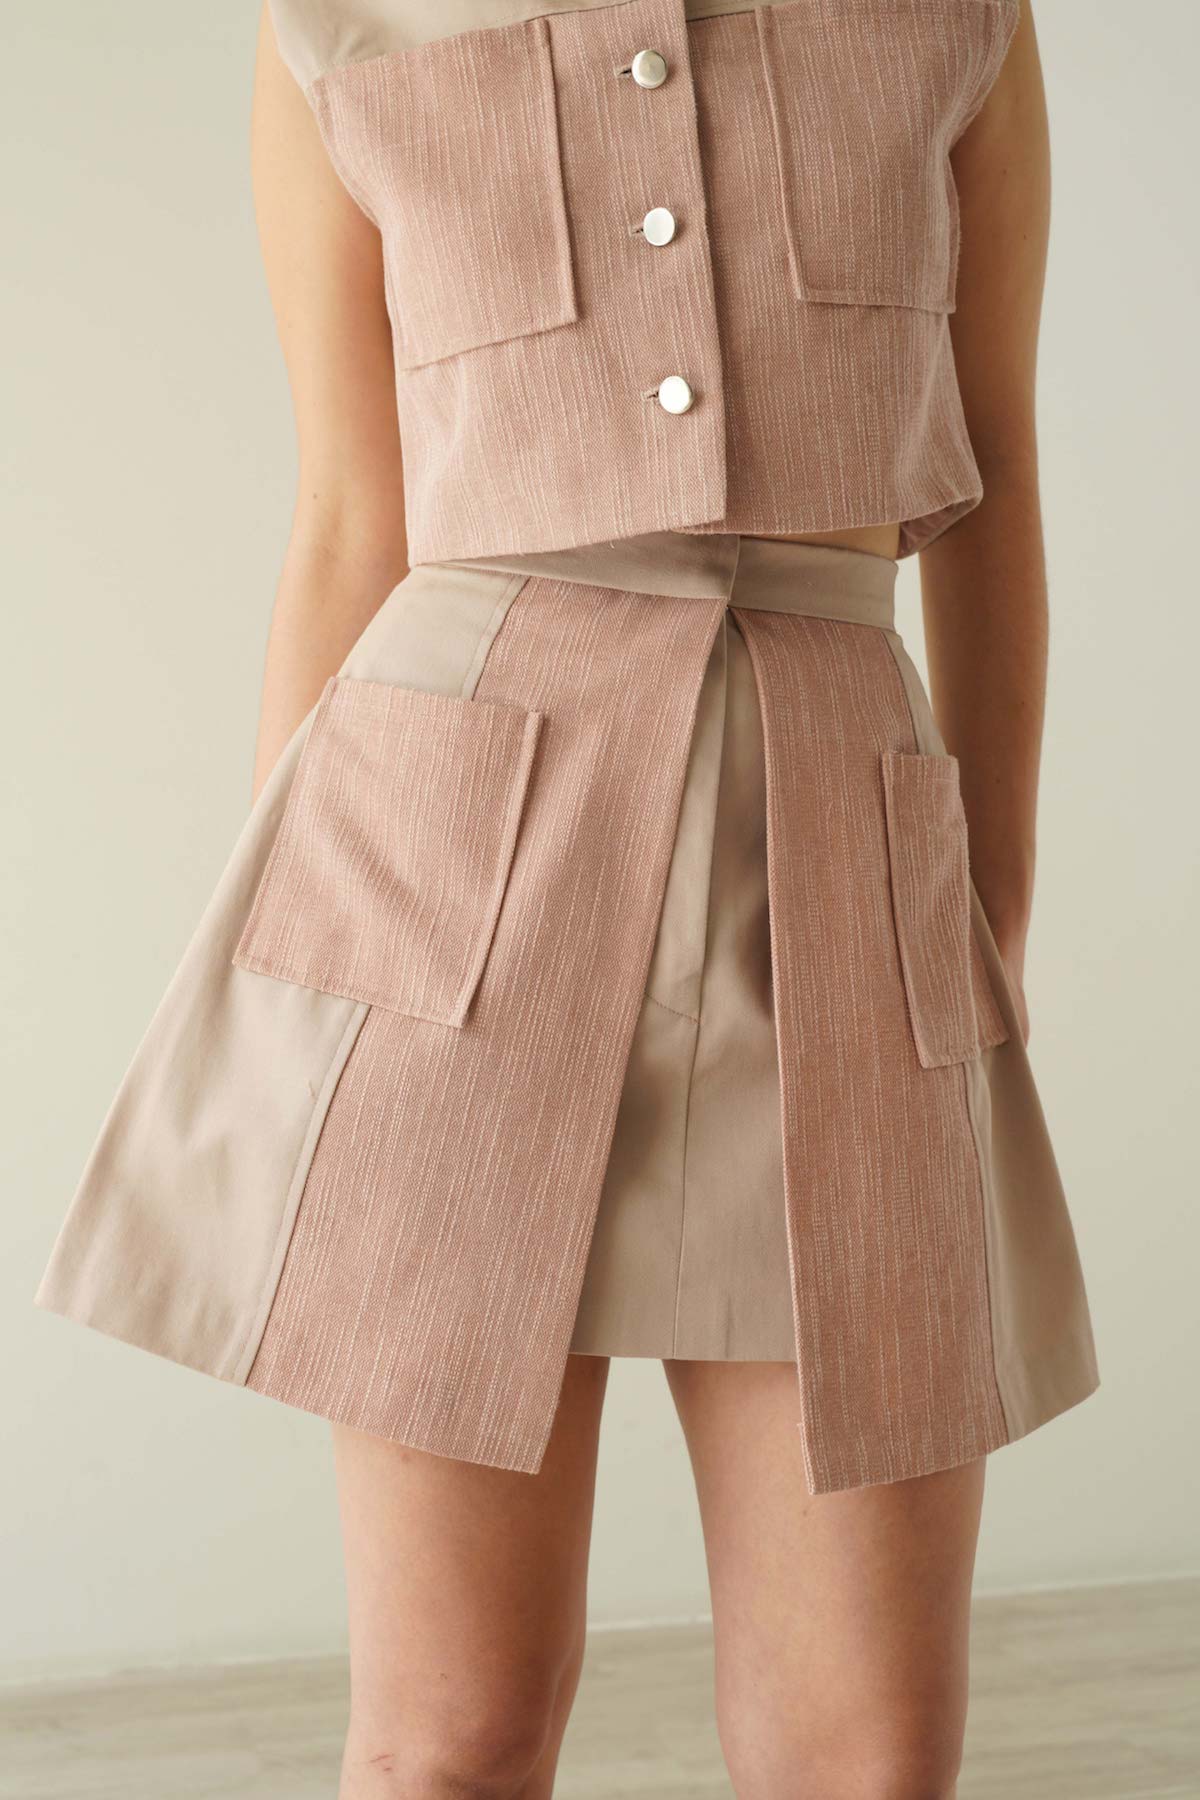 Keyframe Skirt in Rosewood ( Left 1XS,2M,1L)